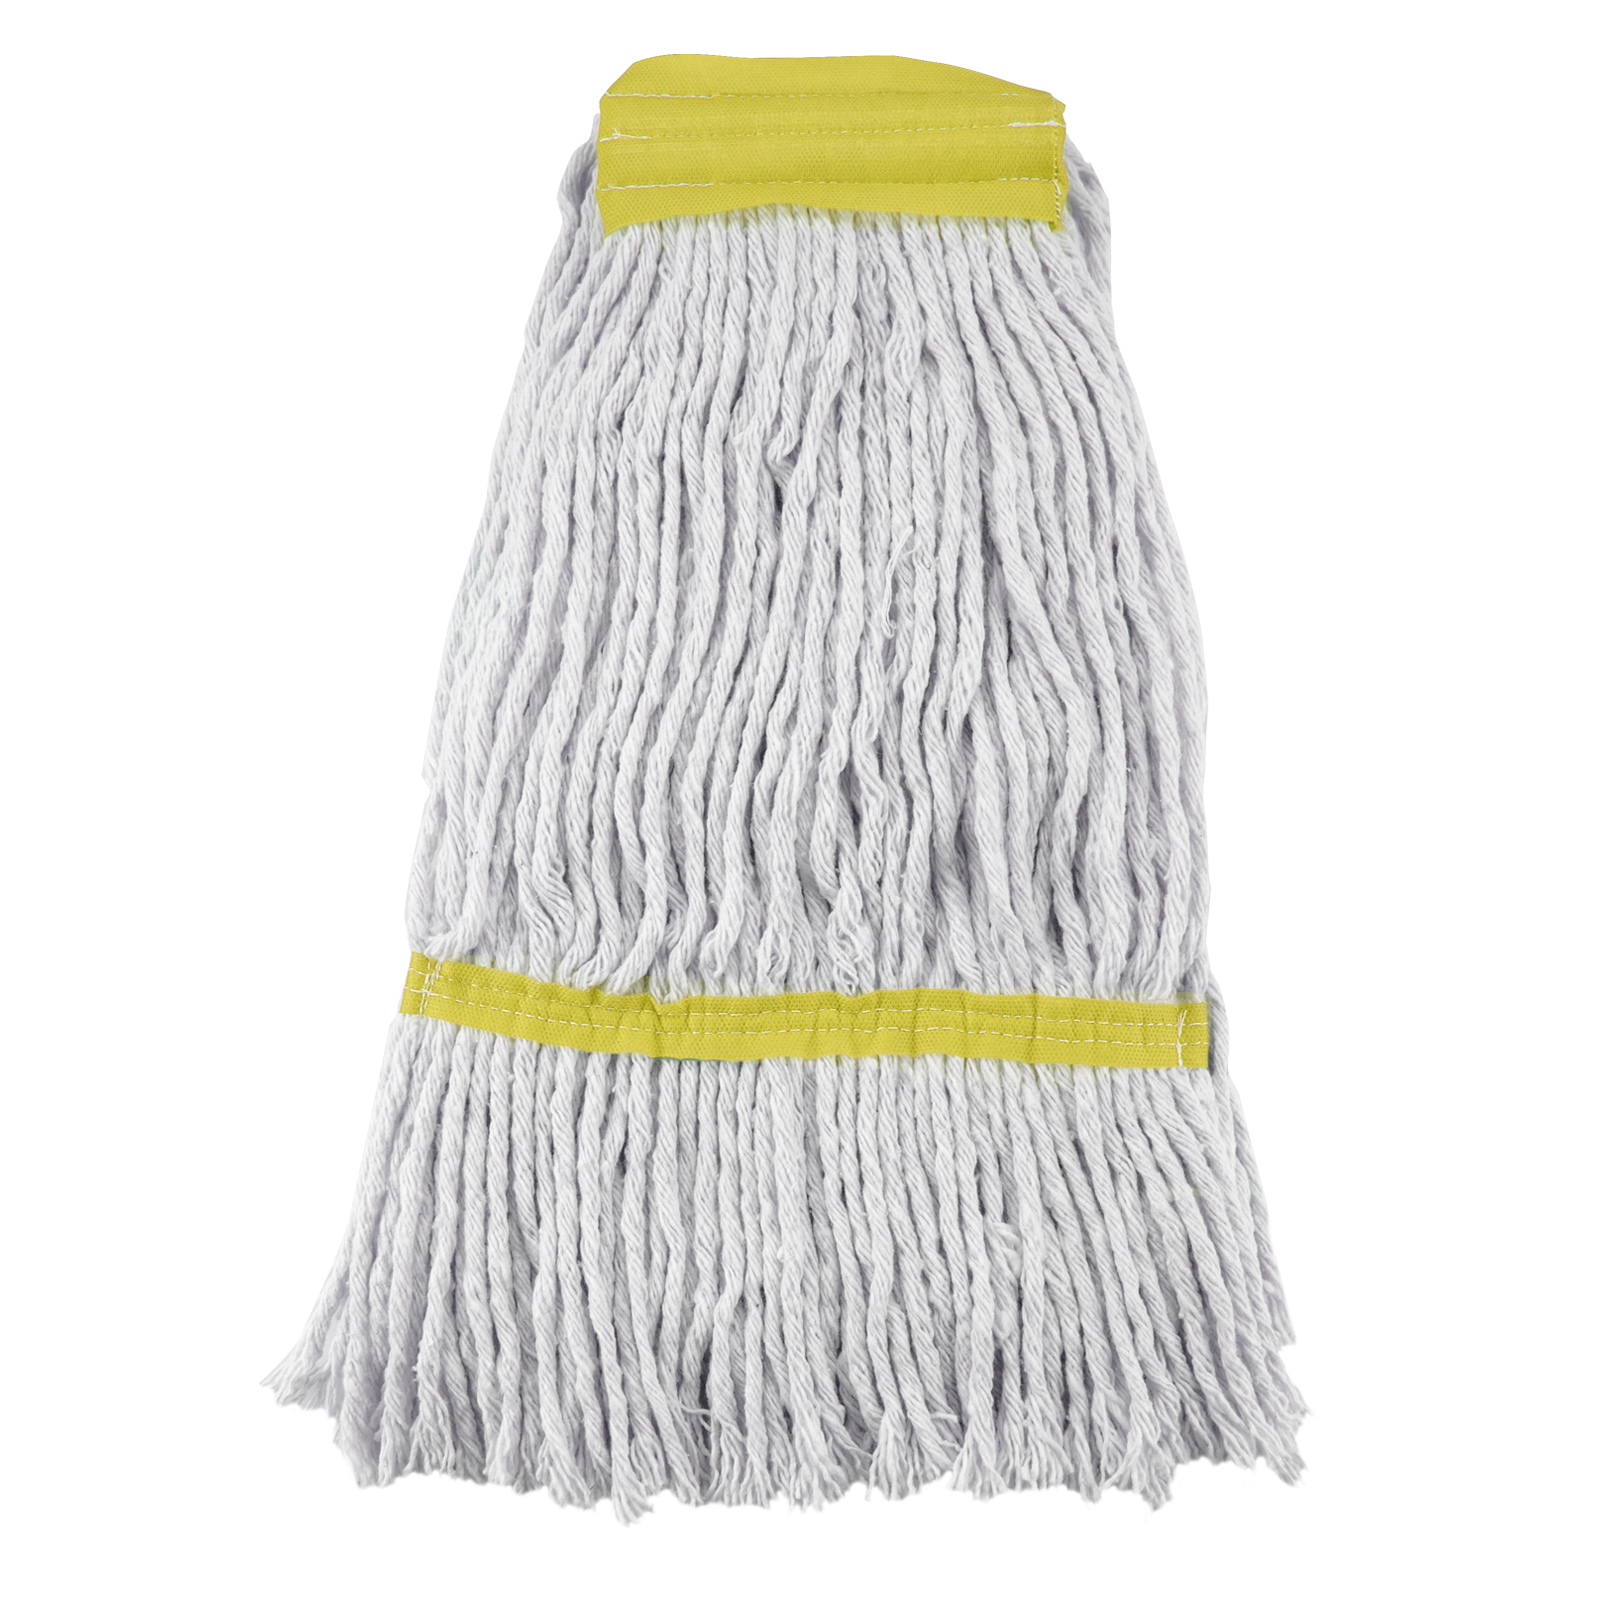 Ricambio mop cotone per pinza "Spring" giallo 400gr - 41 cm | Briantina Professional